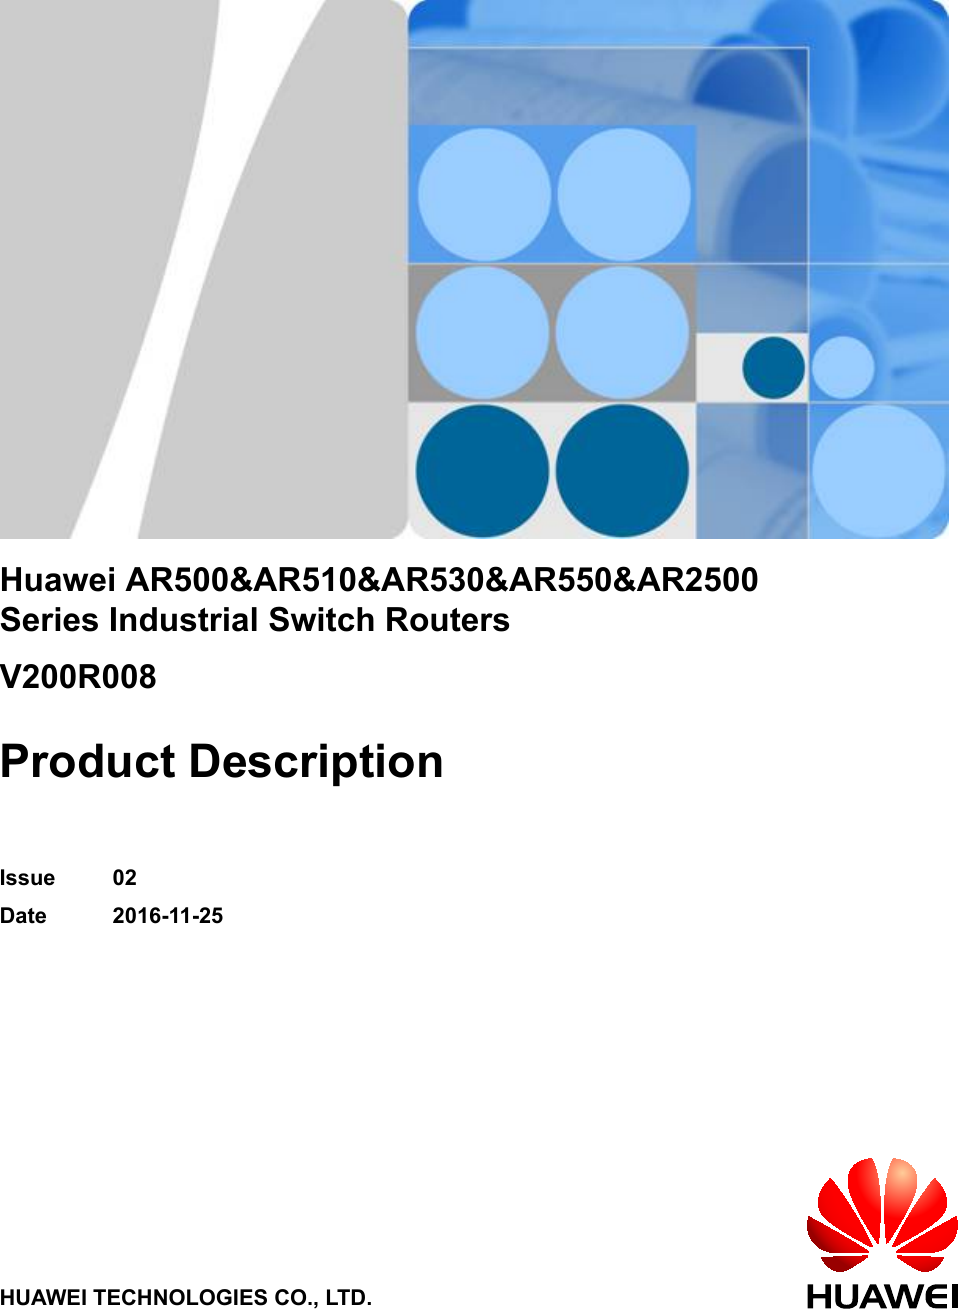 Huawei AR500&amp;AR510&amp;AR530&amp;AR550&amp;AR2500Series Industrial Switch RoutersV200R008Product DescriptionIssue 02Date 2016-11-25HUAWEI TECHNOLOGIES CO., LTD.